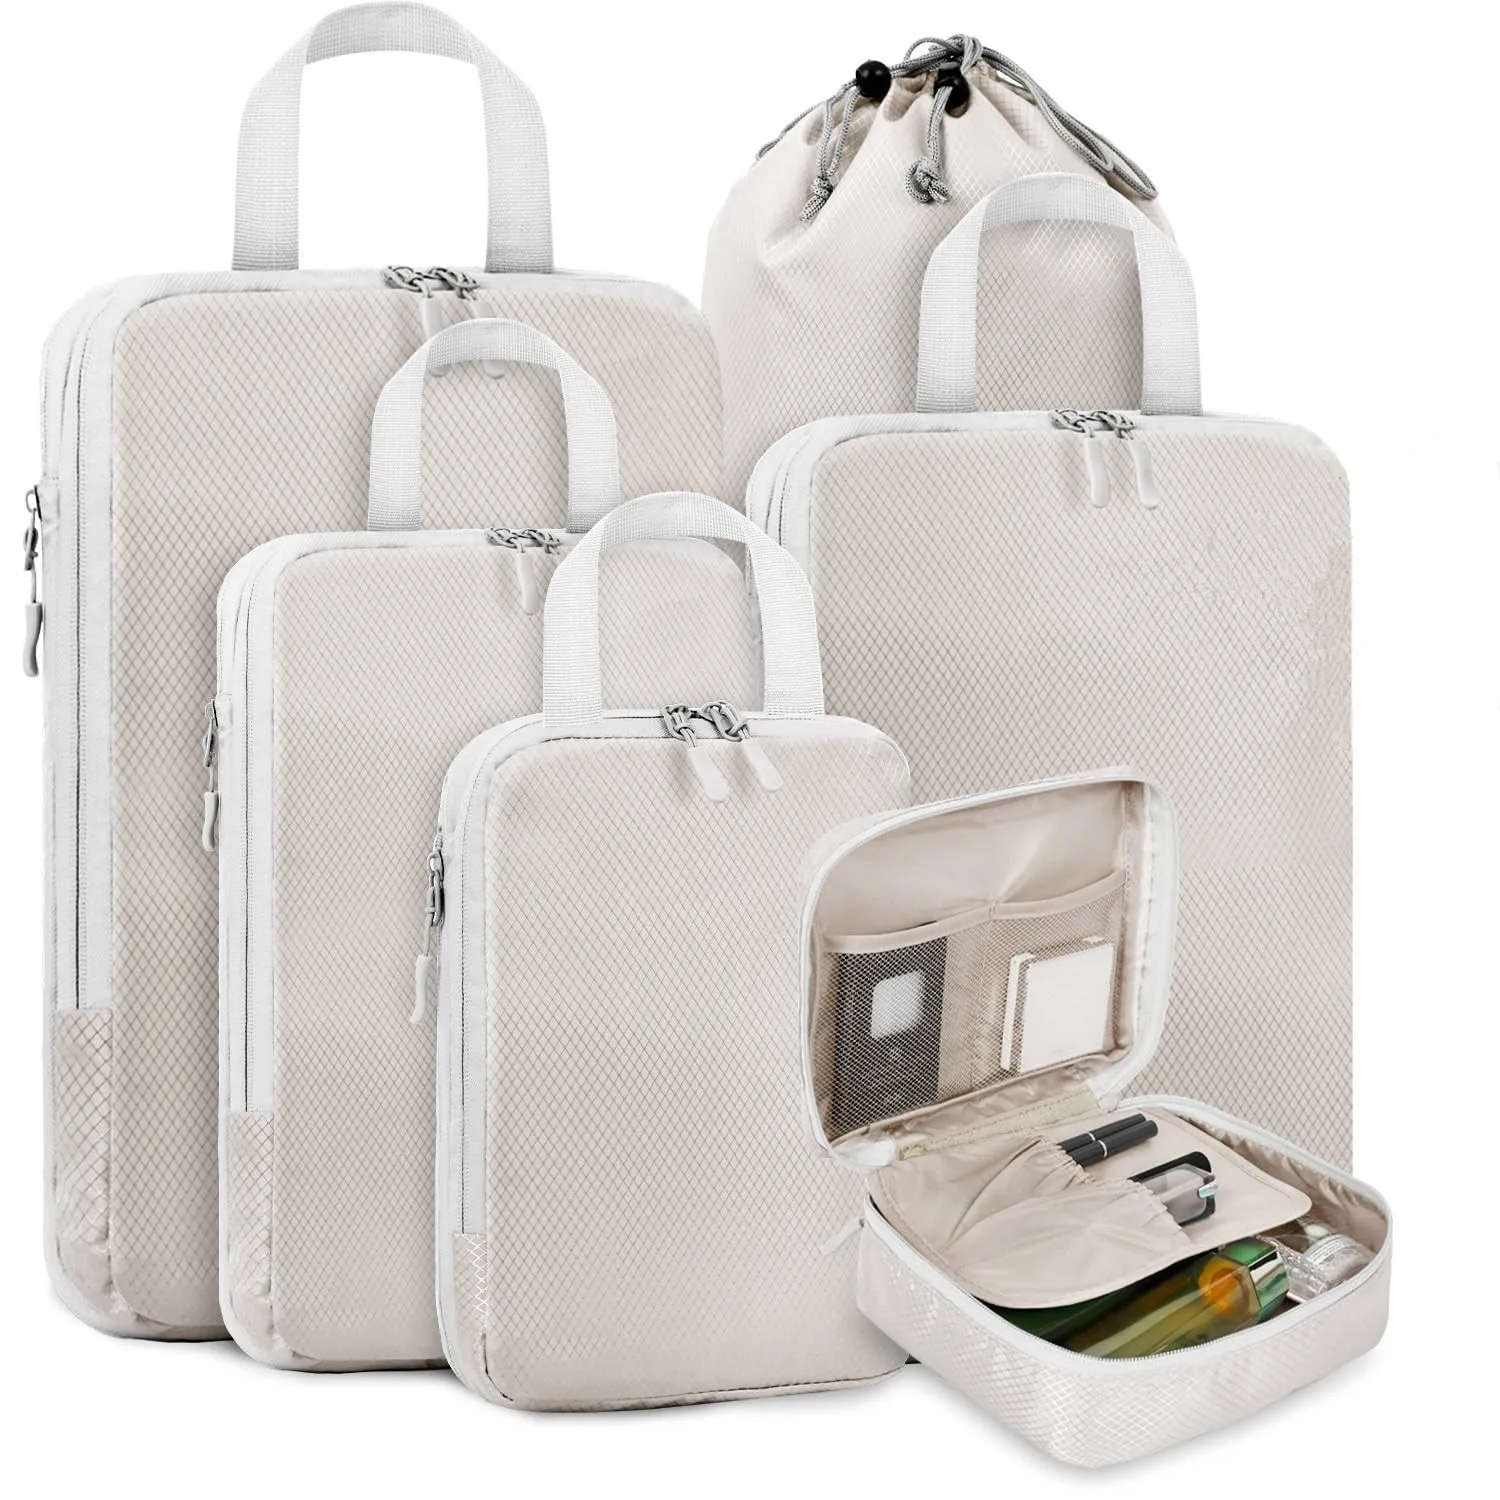 

6PCS Compressed Packing Cubes Travel Storage Set With Shoe Bag Mesh Visual Luggage Organizer Portable Lightweight Suitcase Bag